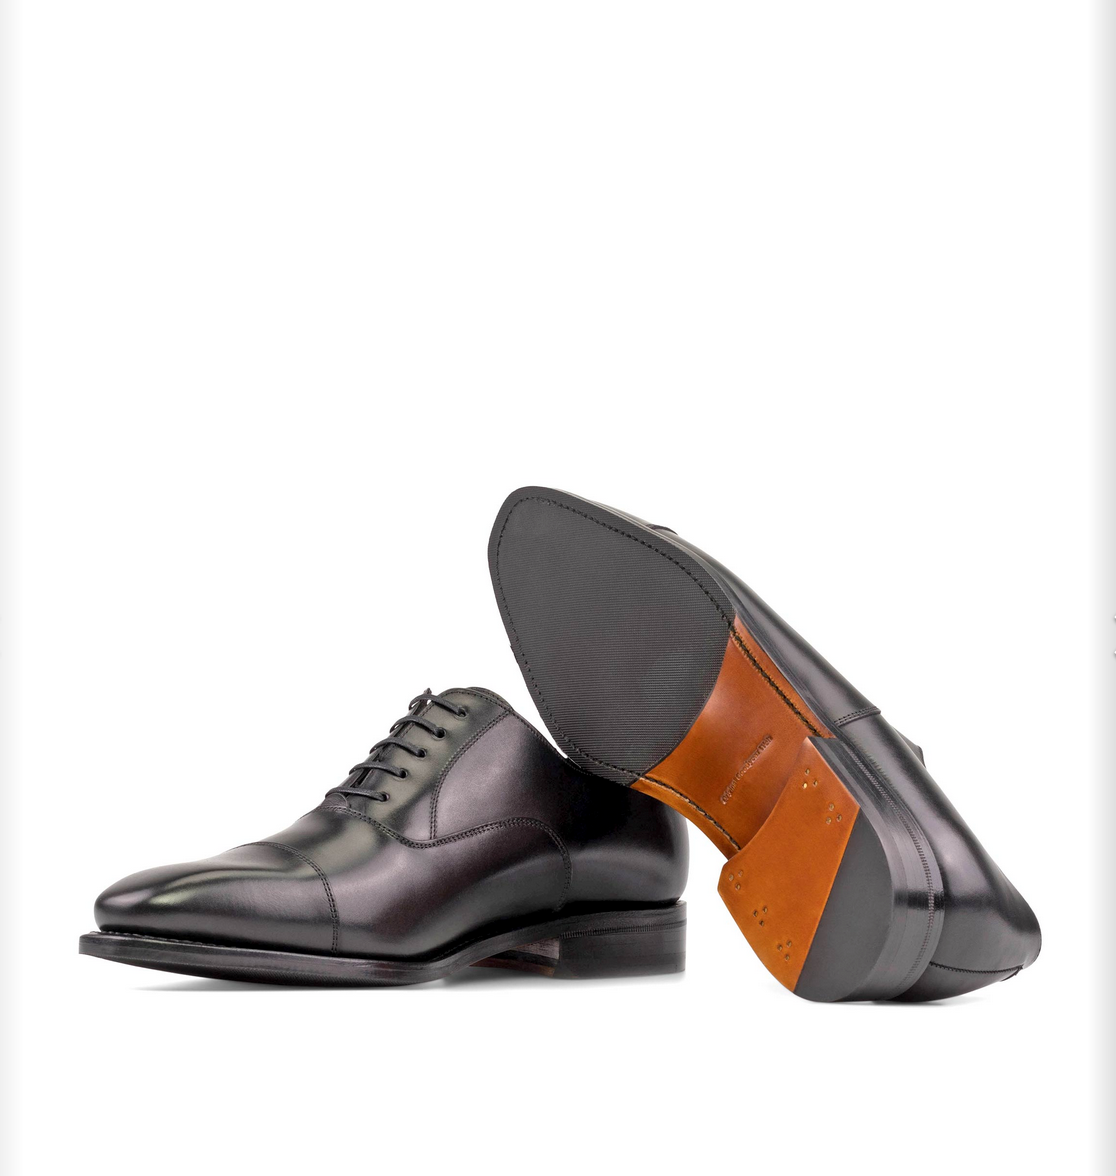 SUITCAFE Oxford Lace Up Black Calf Leather Men's Shoe